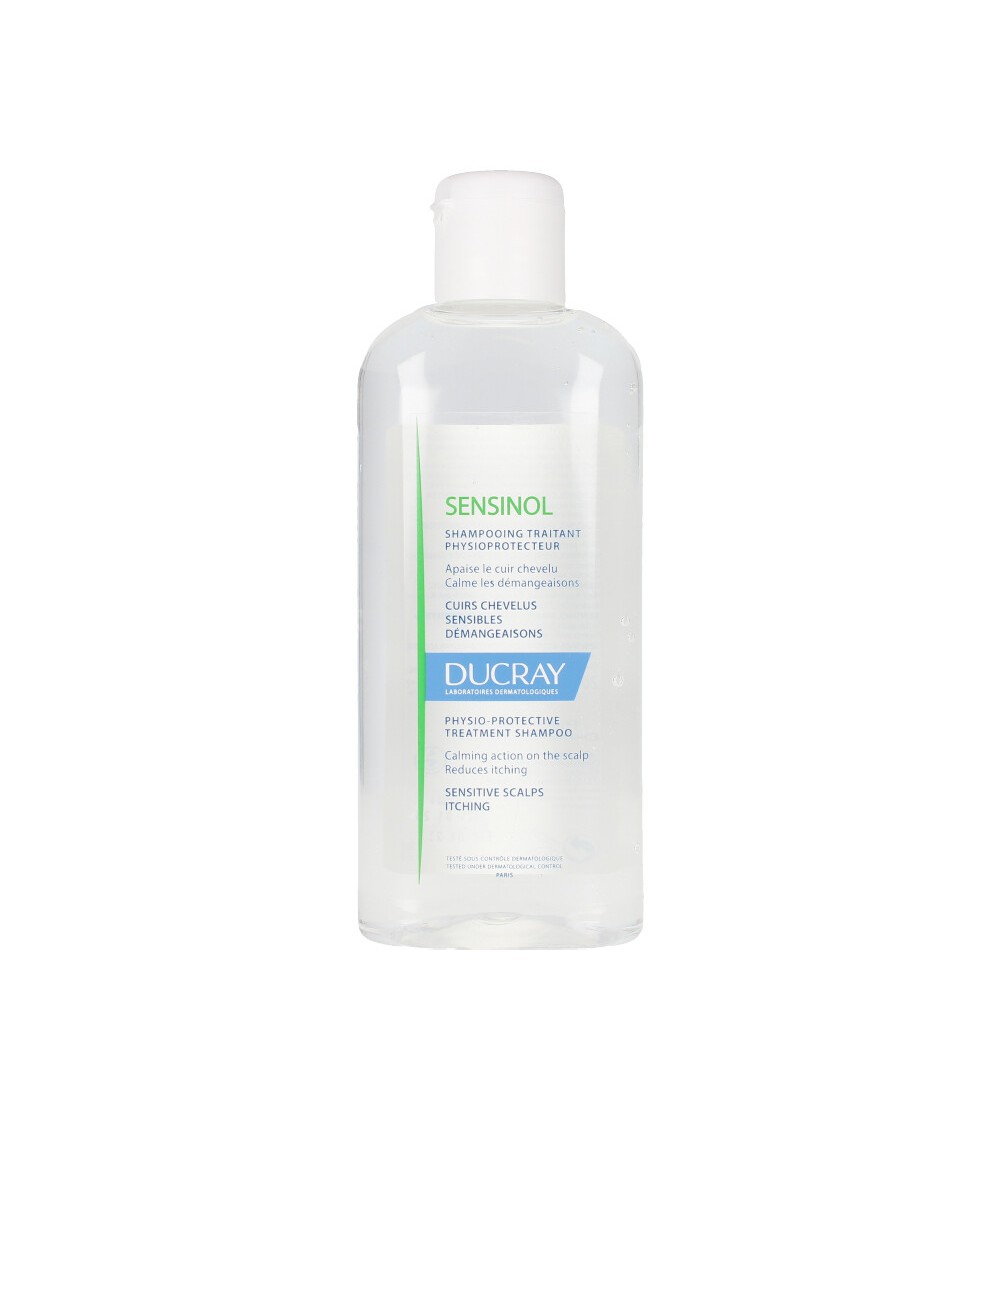 SENSINOL physio-protective treatment shampoo 200 ml